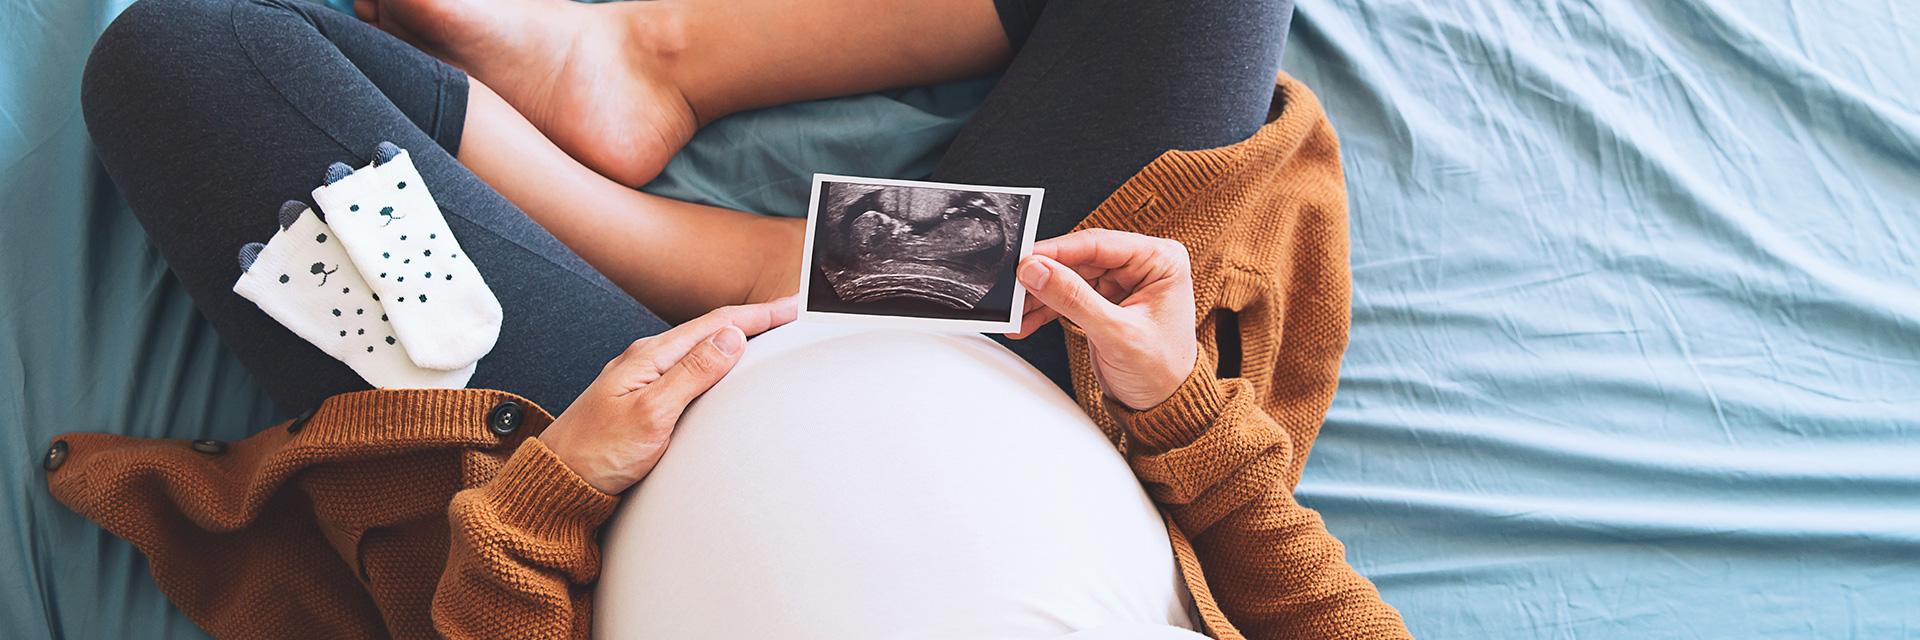 Prenatal Care | Common Questions During Pregnancy | Texas Health